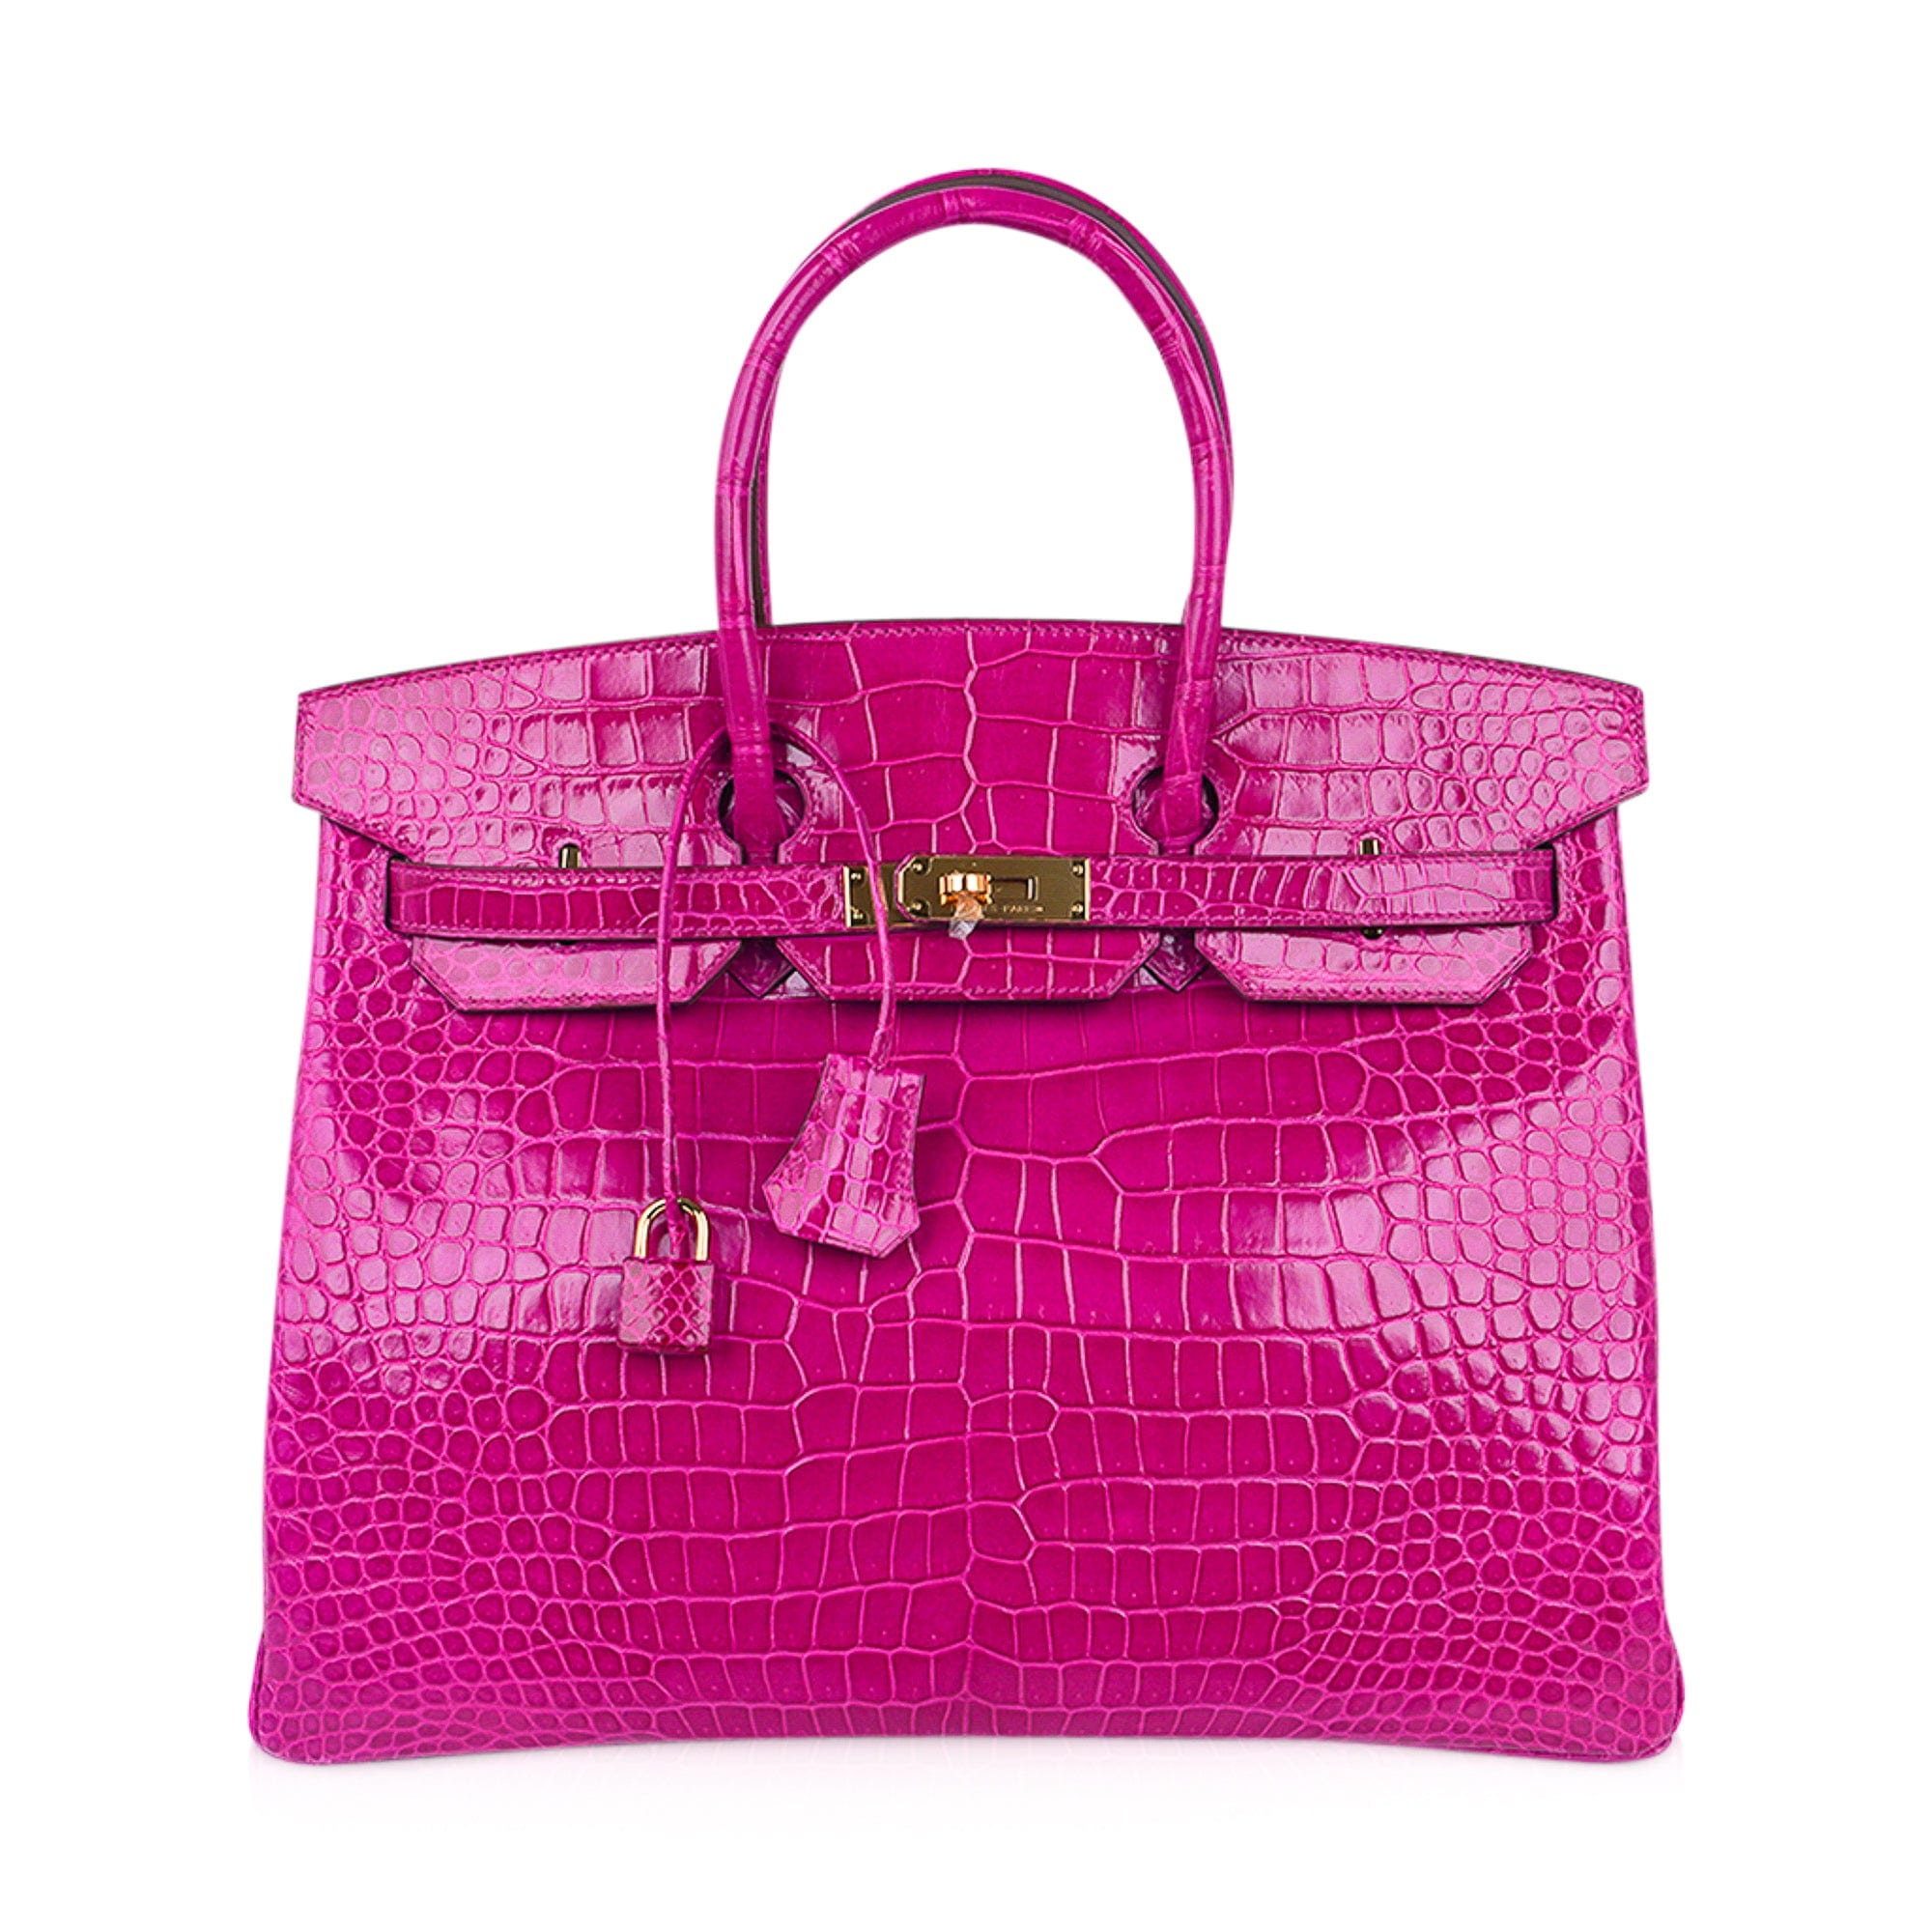 Hermes Birkin Bag Crocodile Leather Gold Hardware In Rose